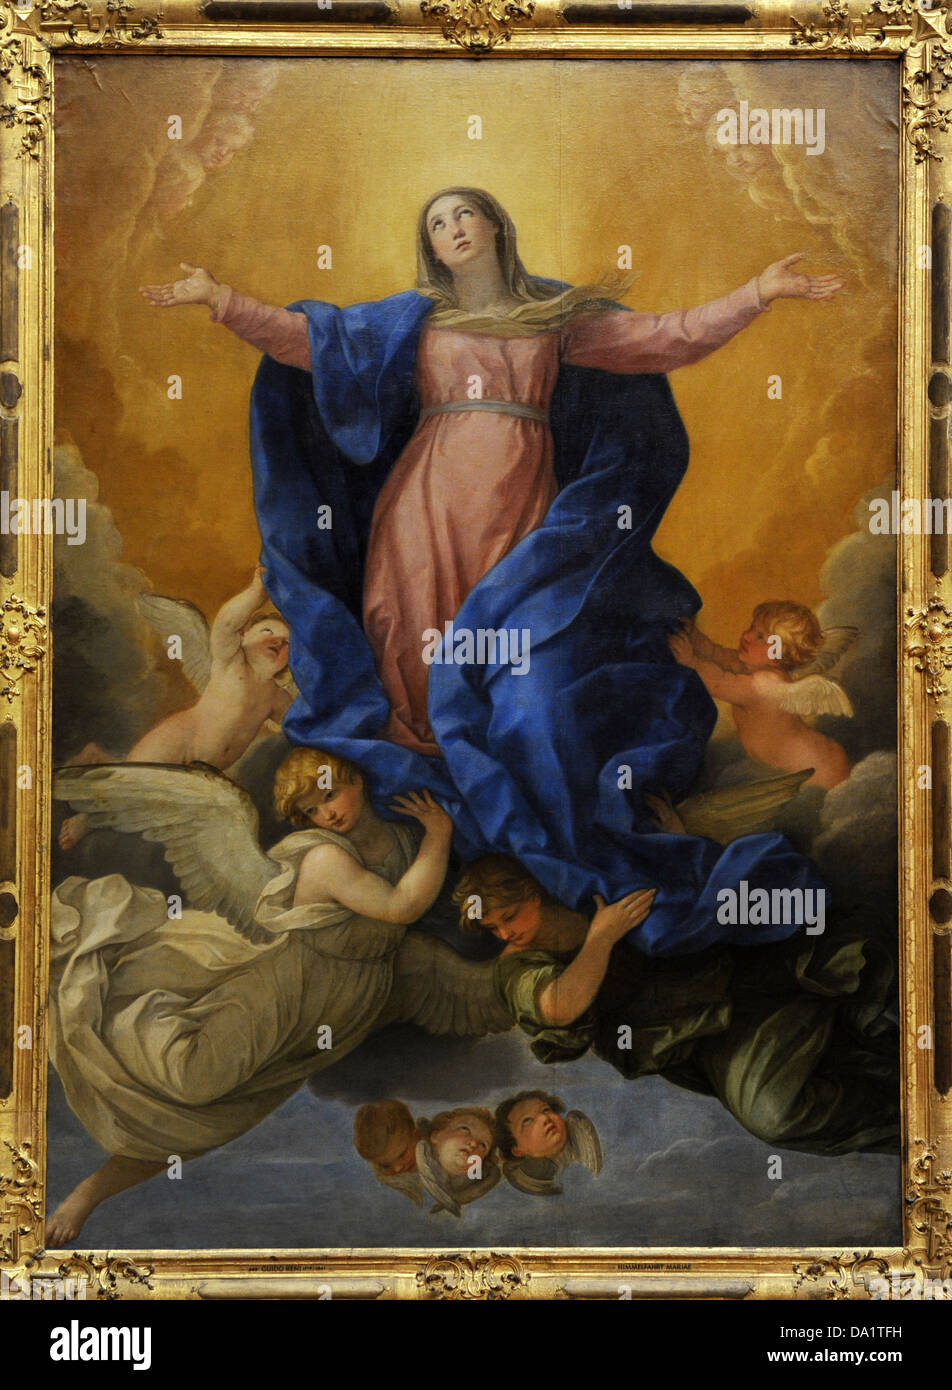 Guido Reni (1575-1642). Italian painter. The Assumption of the Virgin Mary, 1642. Alte Pinakothek. Munich. Germany. Stock Photo